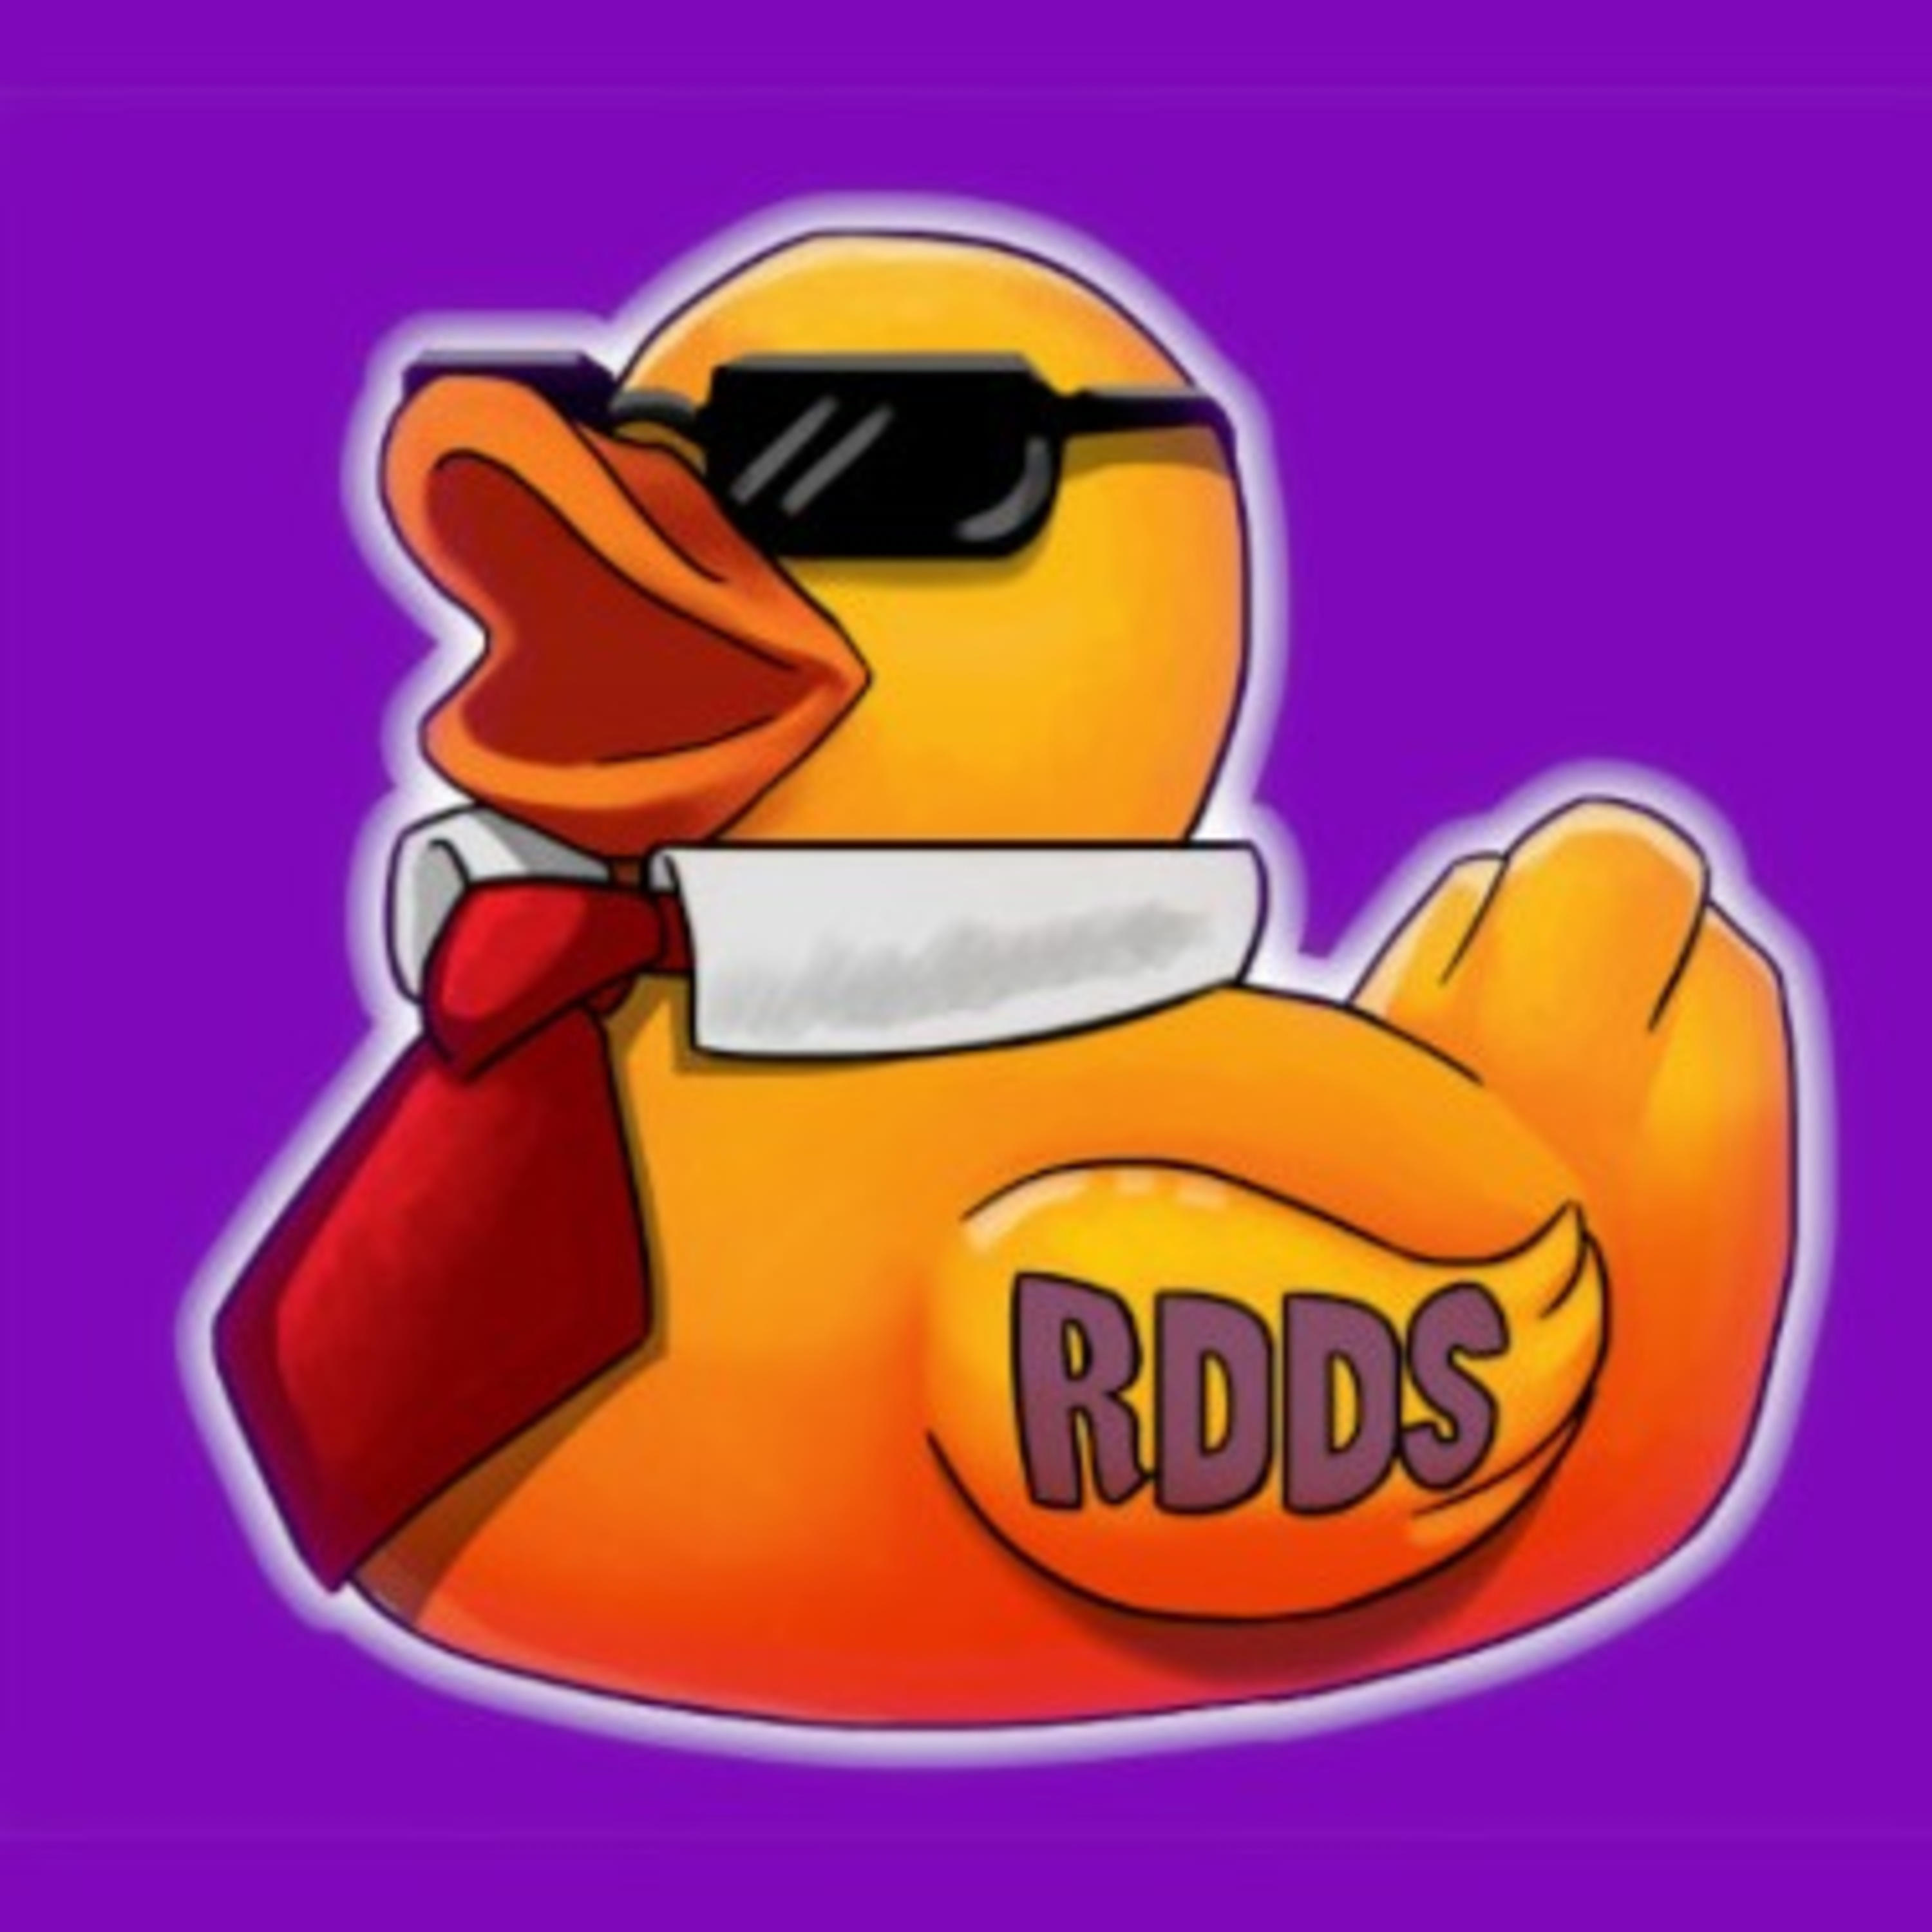 Software Development Technical Project Management | Rubber Duck Dev Show 2